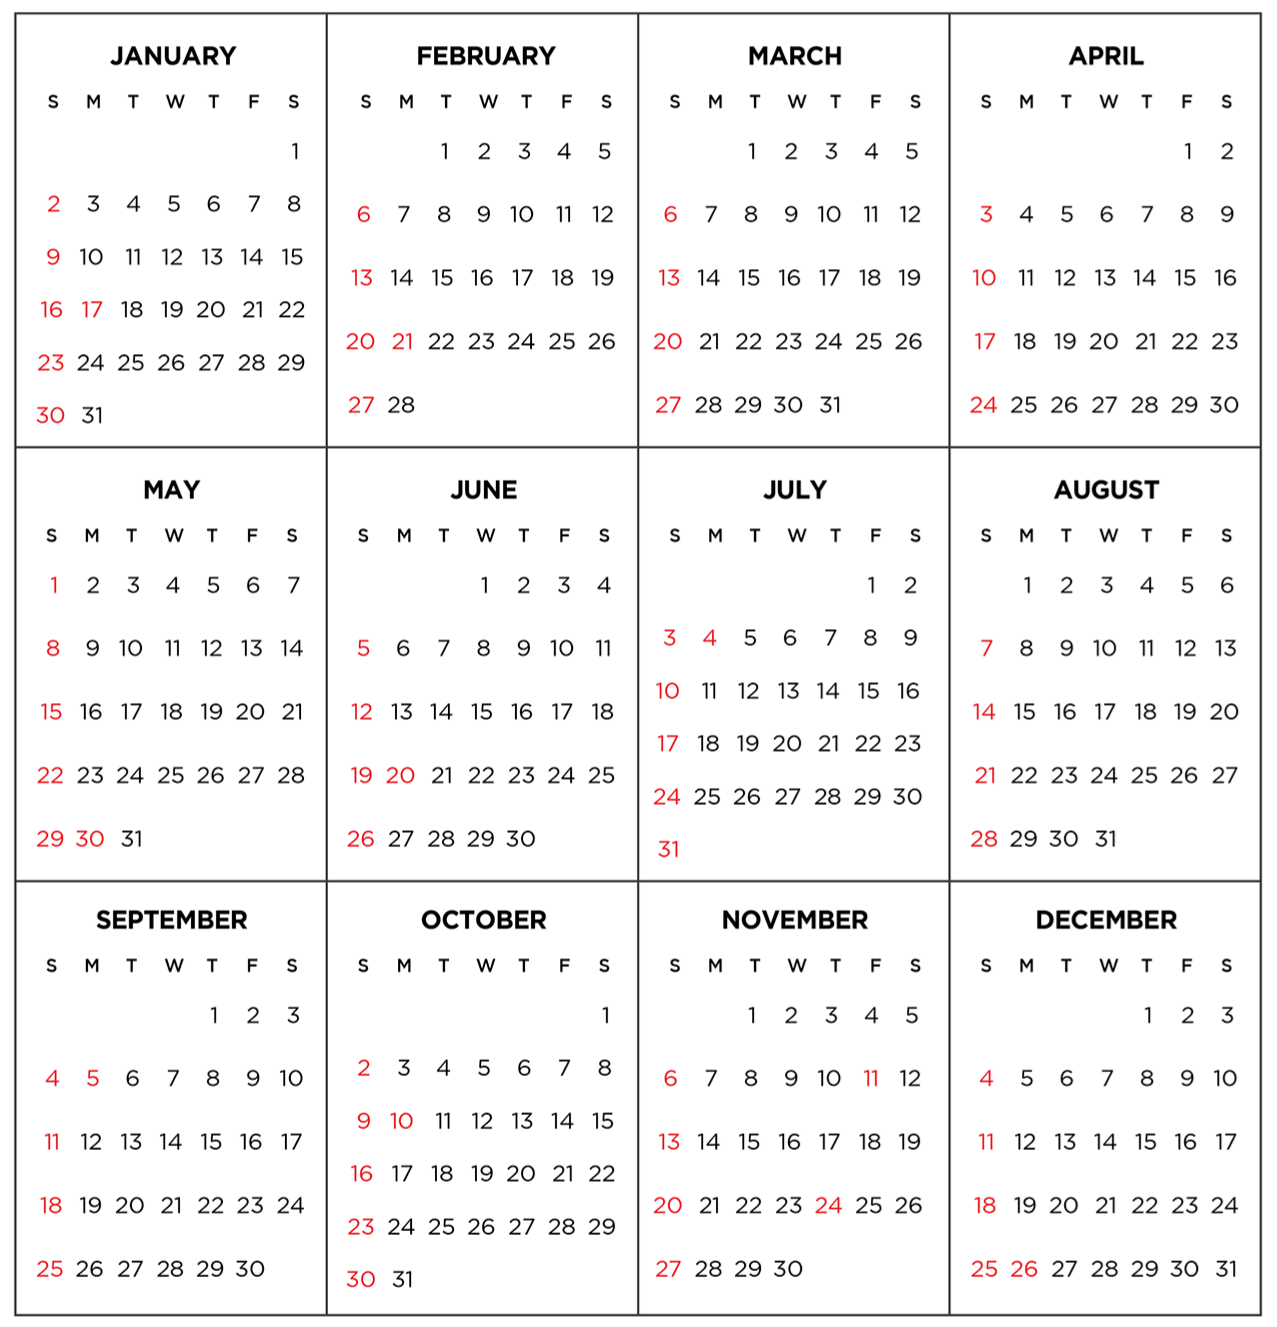 image-953226-2022-Calendar-Printable-with-Holidays-9bf31.w640.png